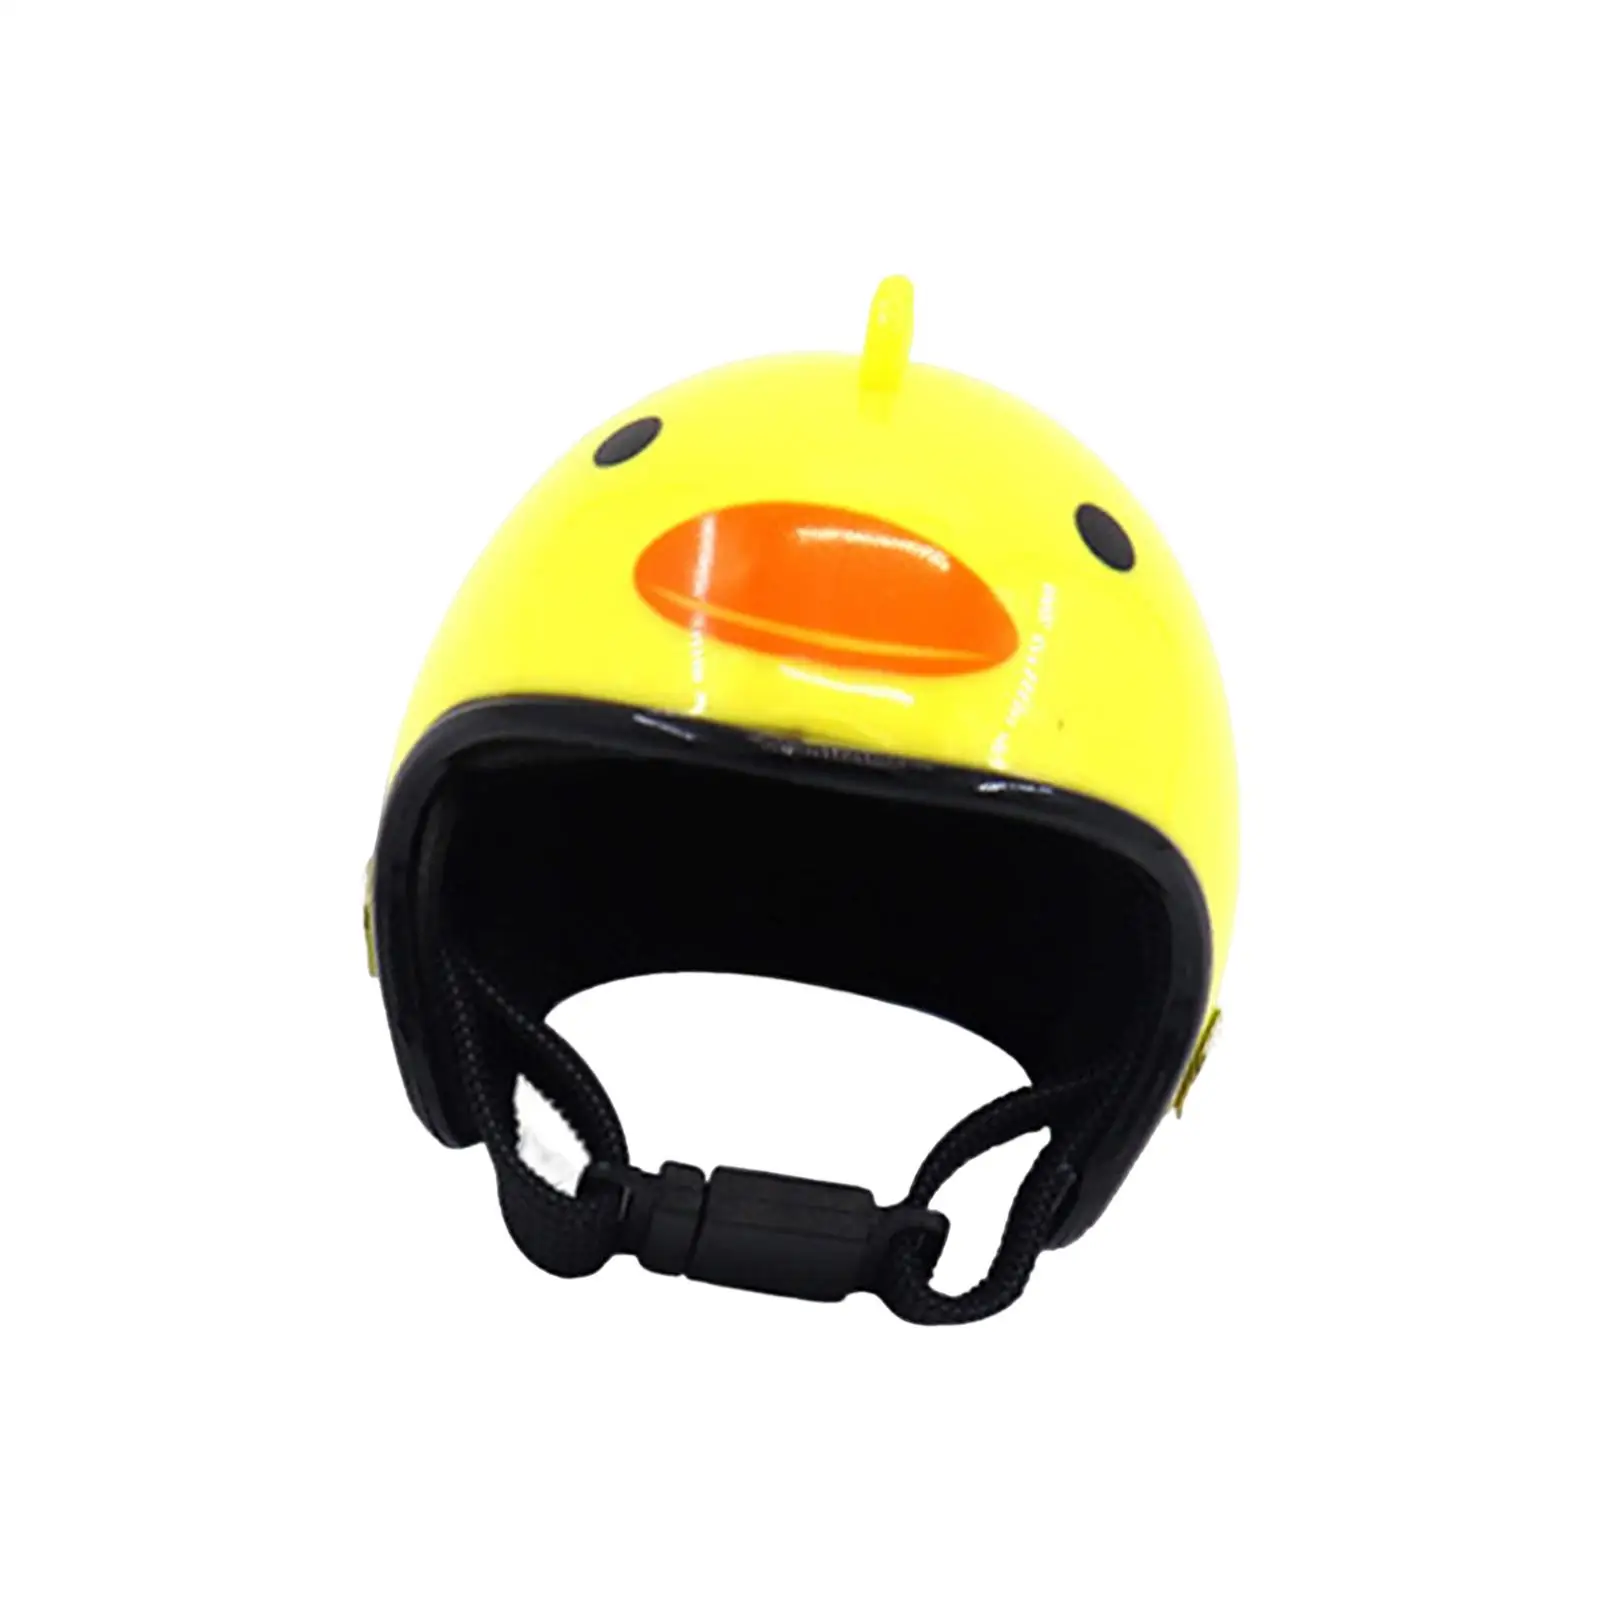 Chicken Hat Pets Headwear Chicken Safety Headgear Bird Hat Funny Costumes Accessories for Halloween Birthday Party Parrot Duck